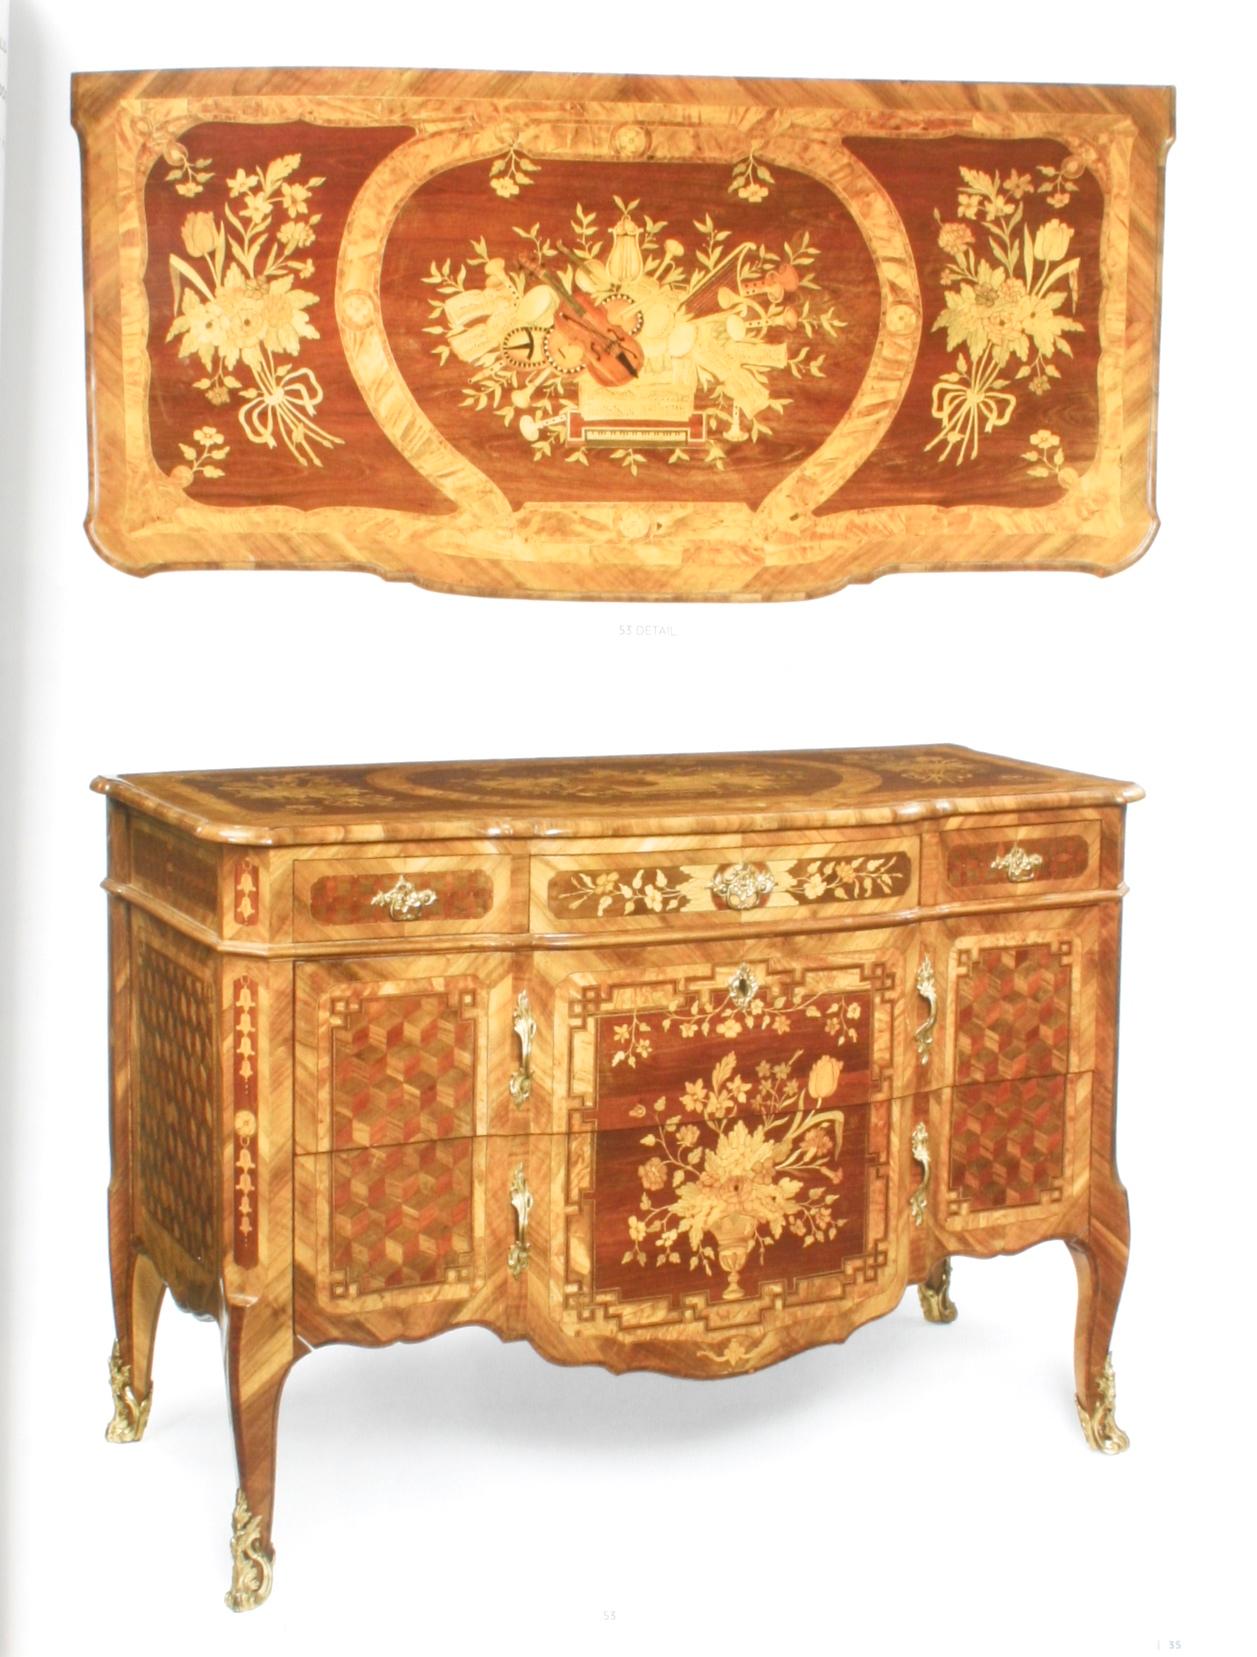 Important French Furniture, Ceramics & Carpets, the Estate of Mrs. Robert Lehman 1